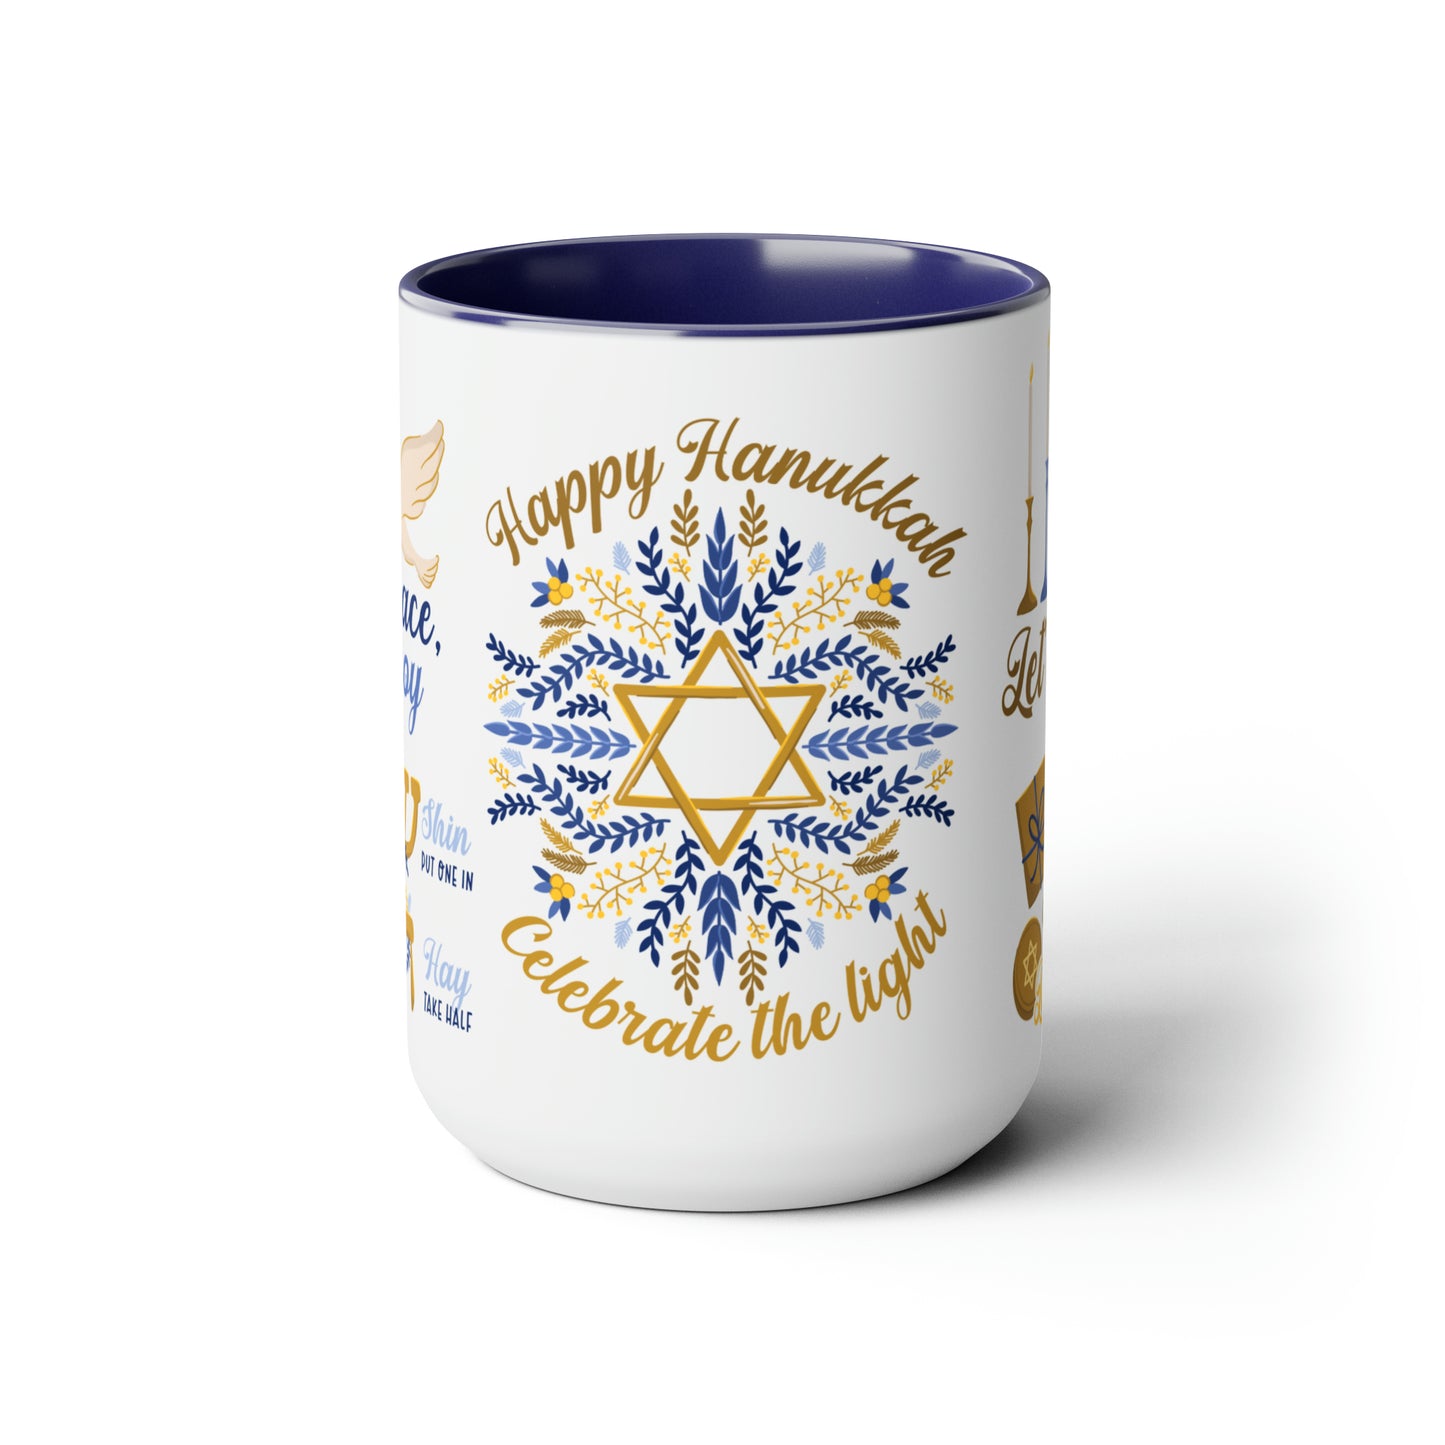 Chanukah Coffee Mugs, 15oz for her or him. Gift ideas for Hanukkah.